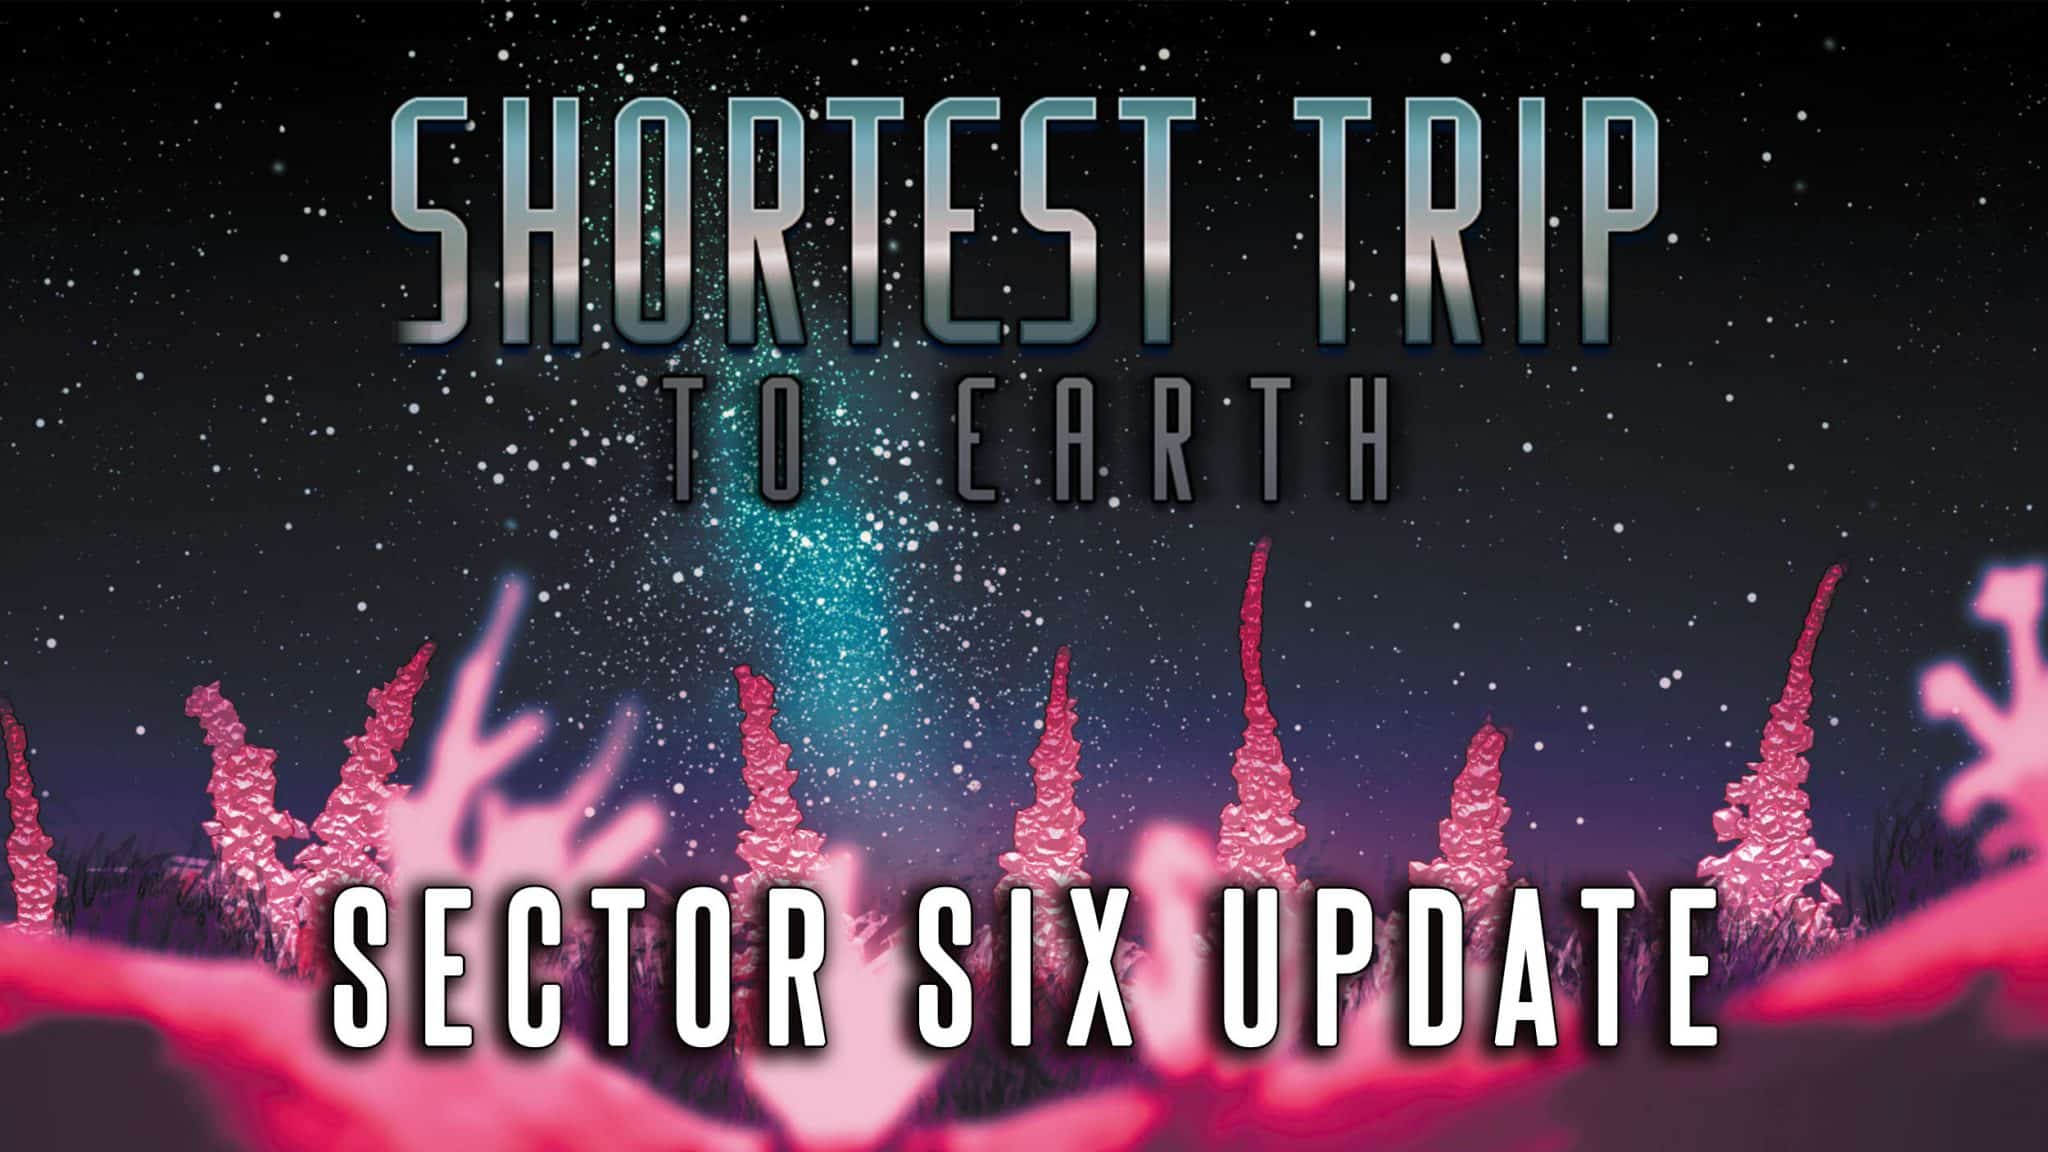 Shortest Trip Sector 6